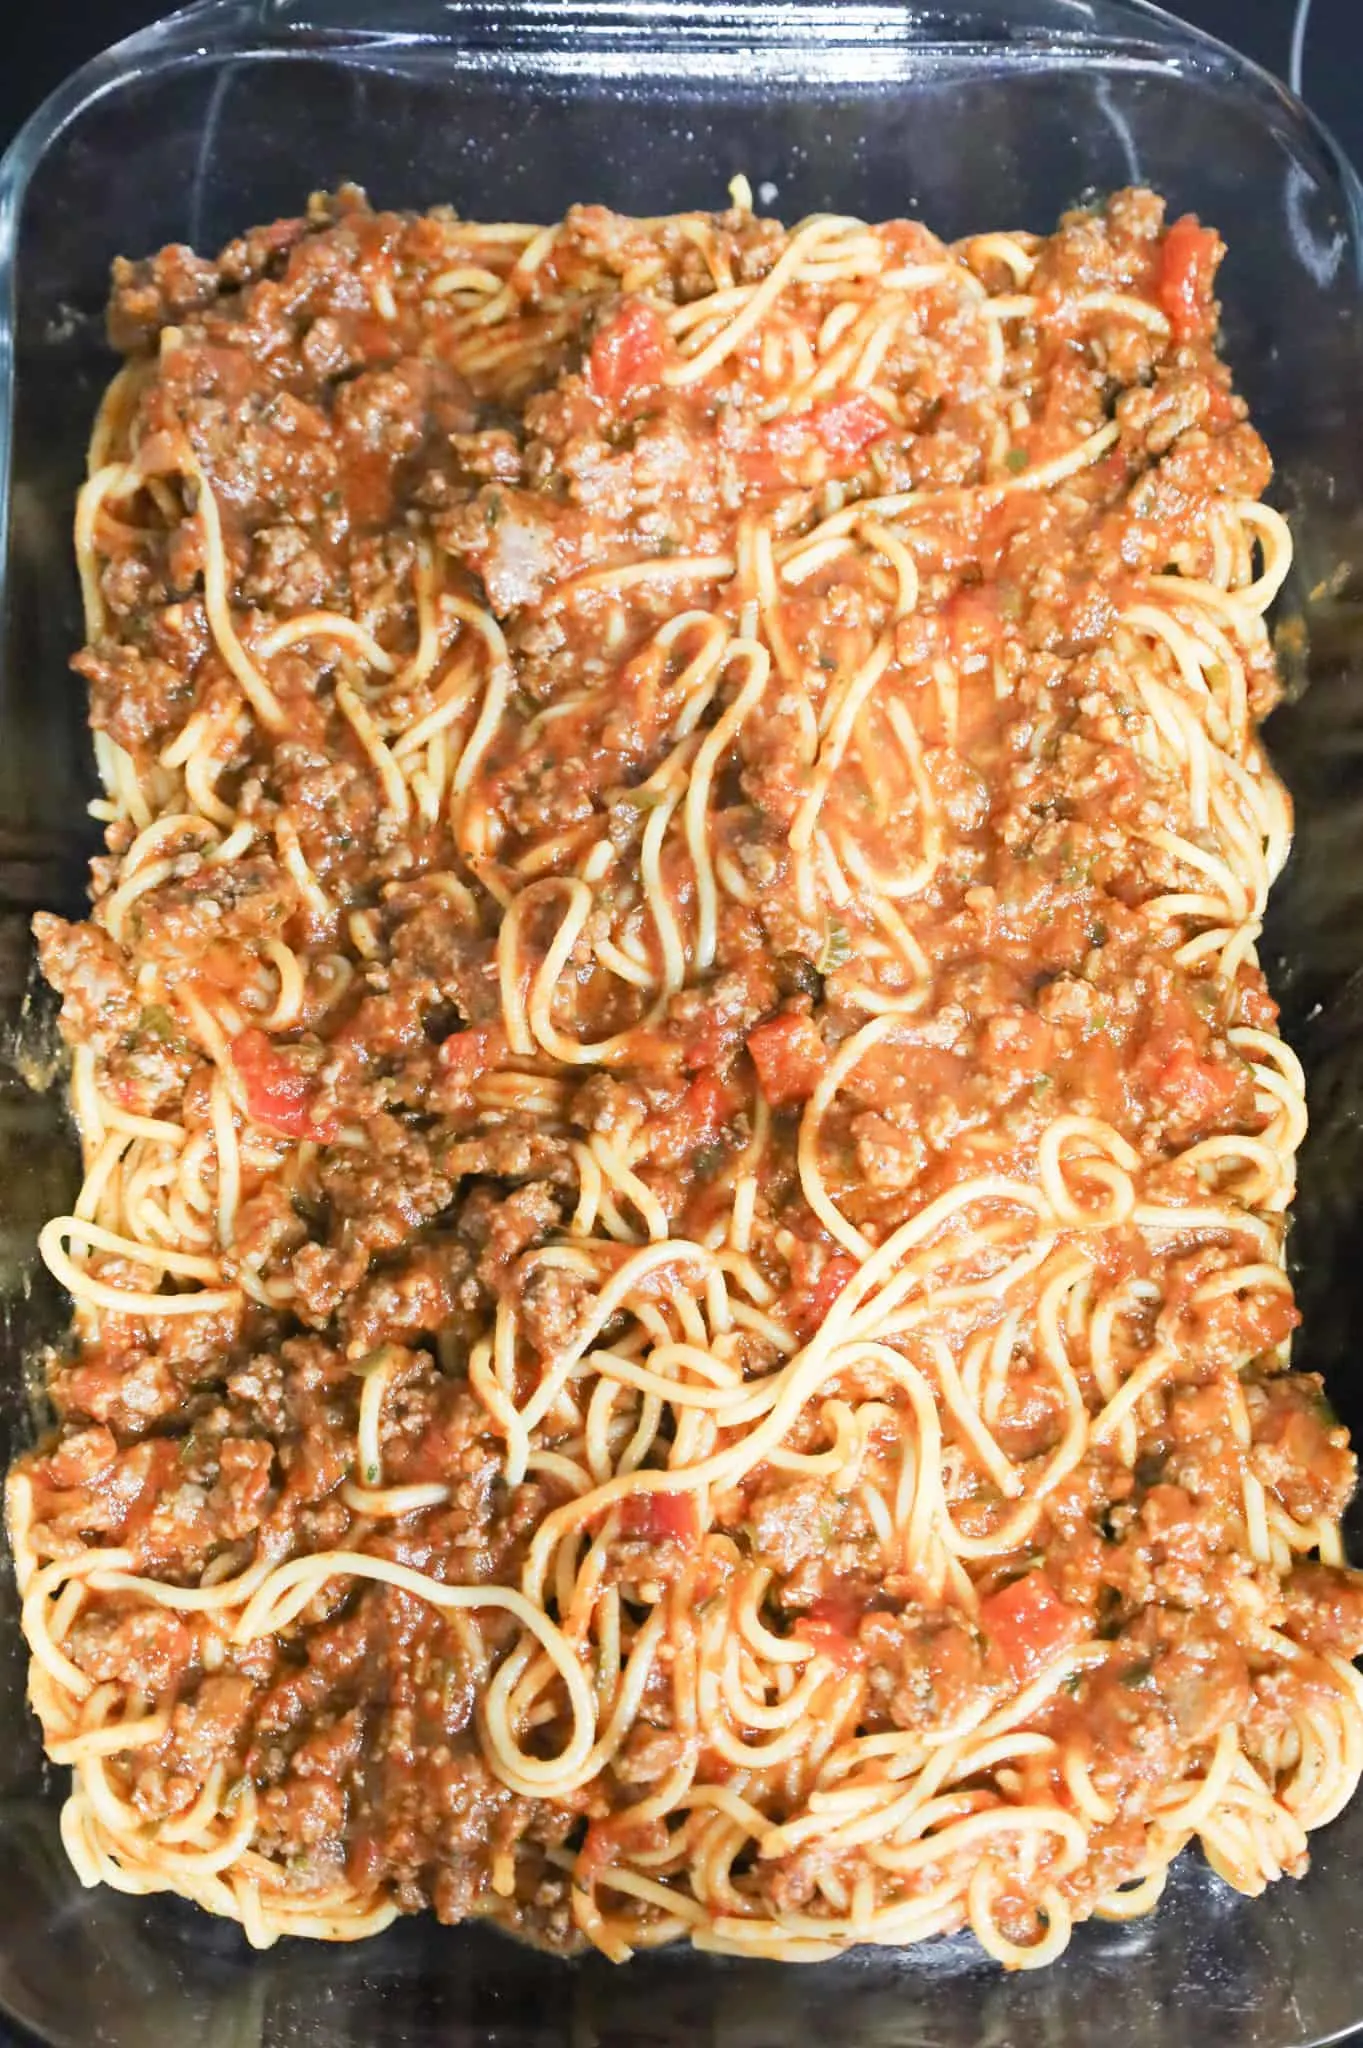 spaghetti, marinara and ground beef mixture in a baking dish